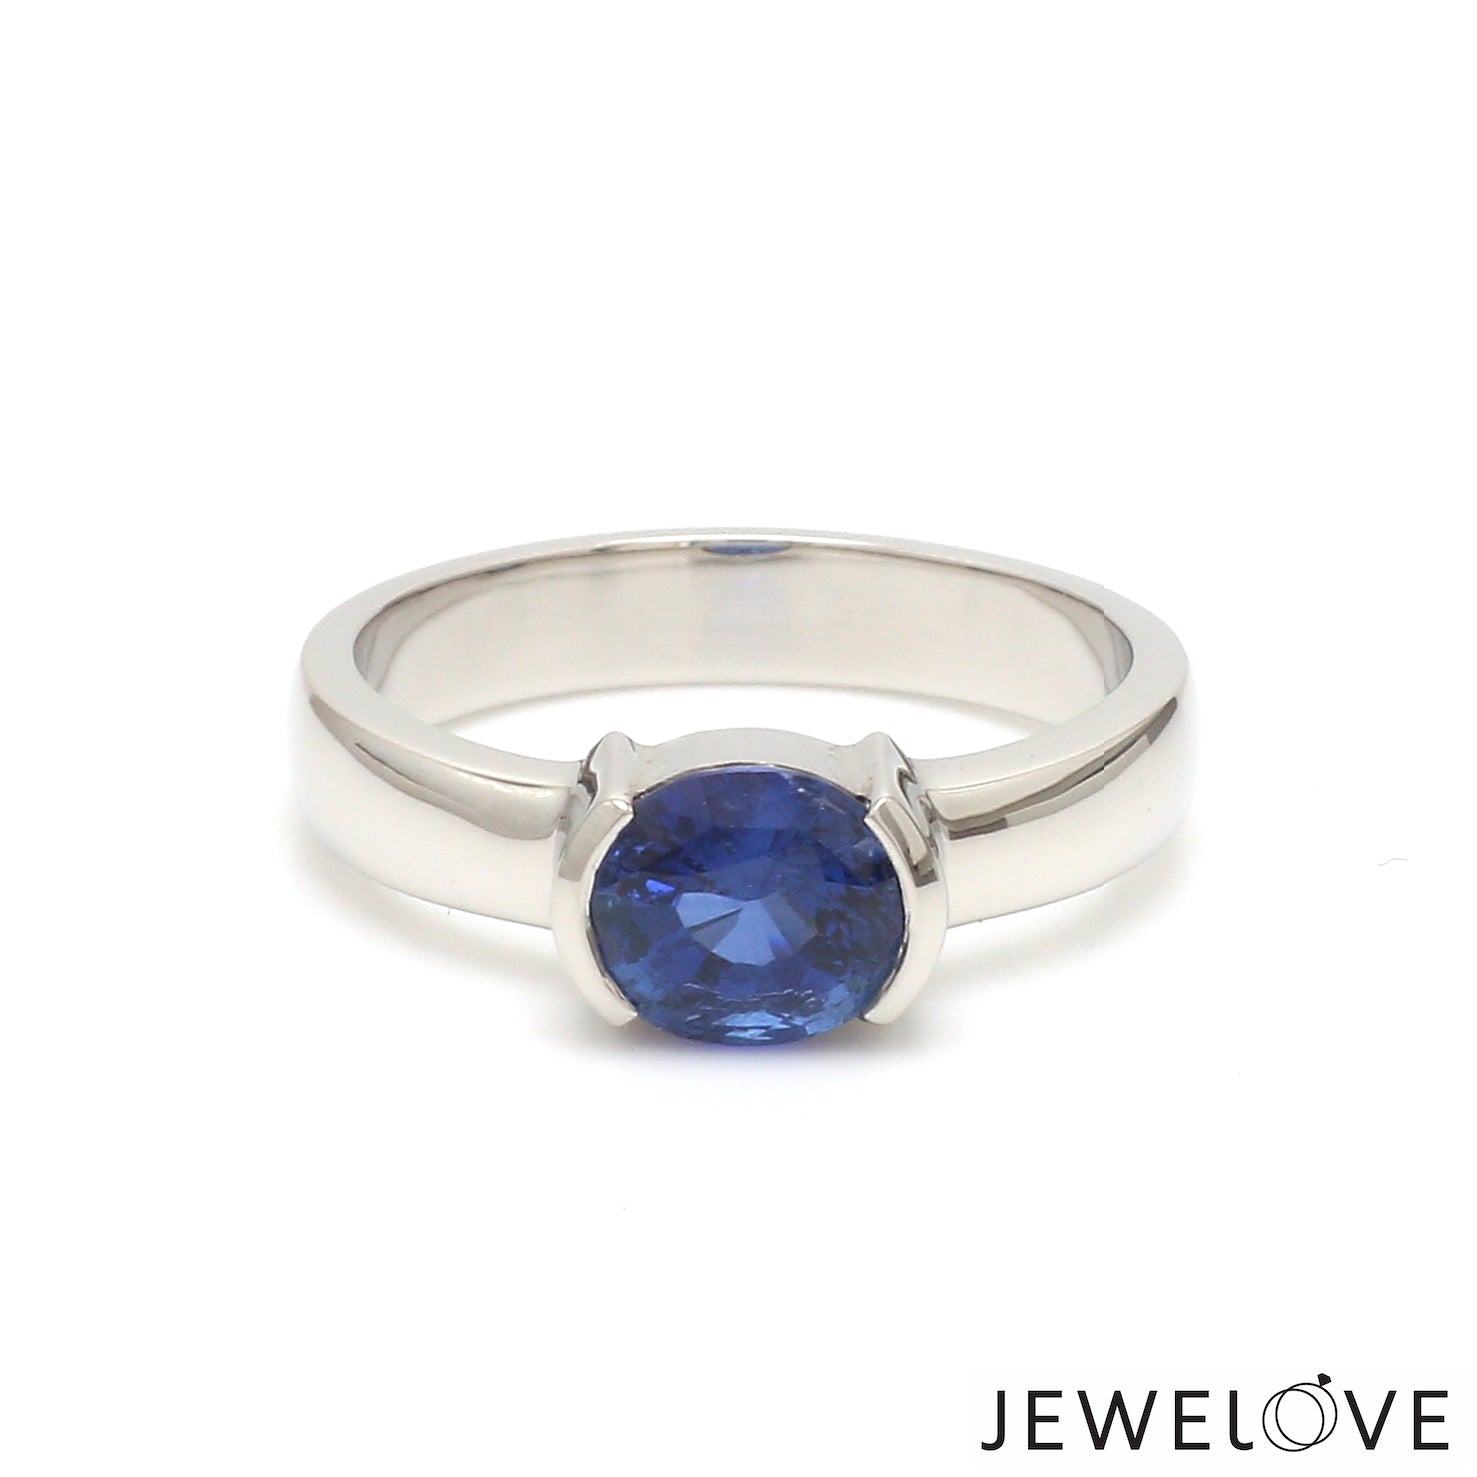 1.20 Carat (Ctw) Natural Blue Sapphire Ring in 14K White Gold with 1/2  Carat (Ctw) Diamonds - Walmart.com